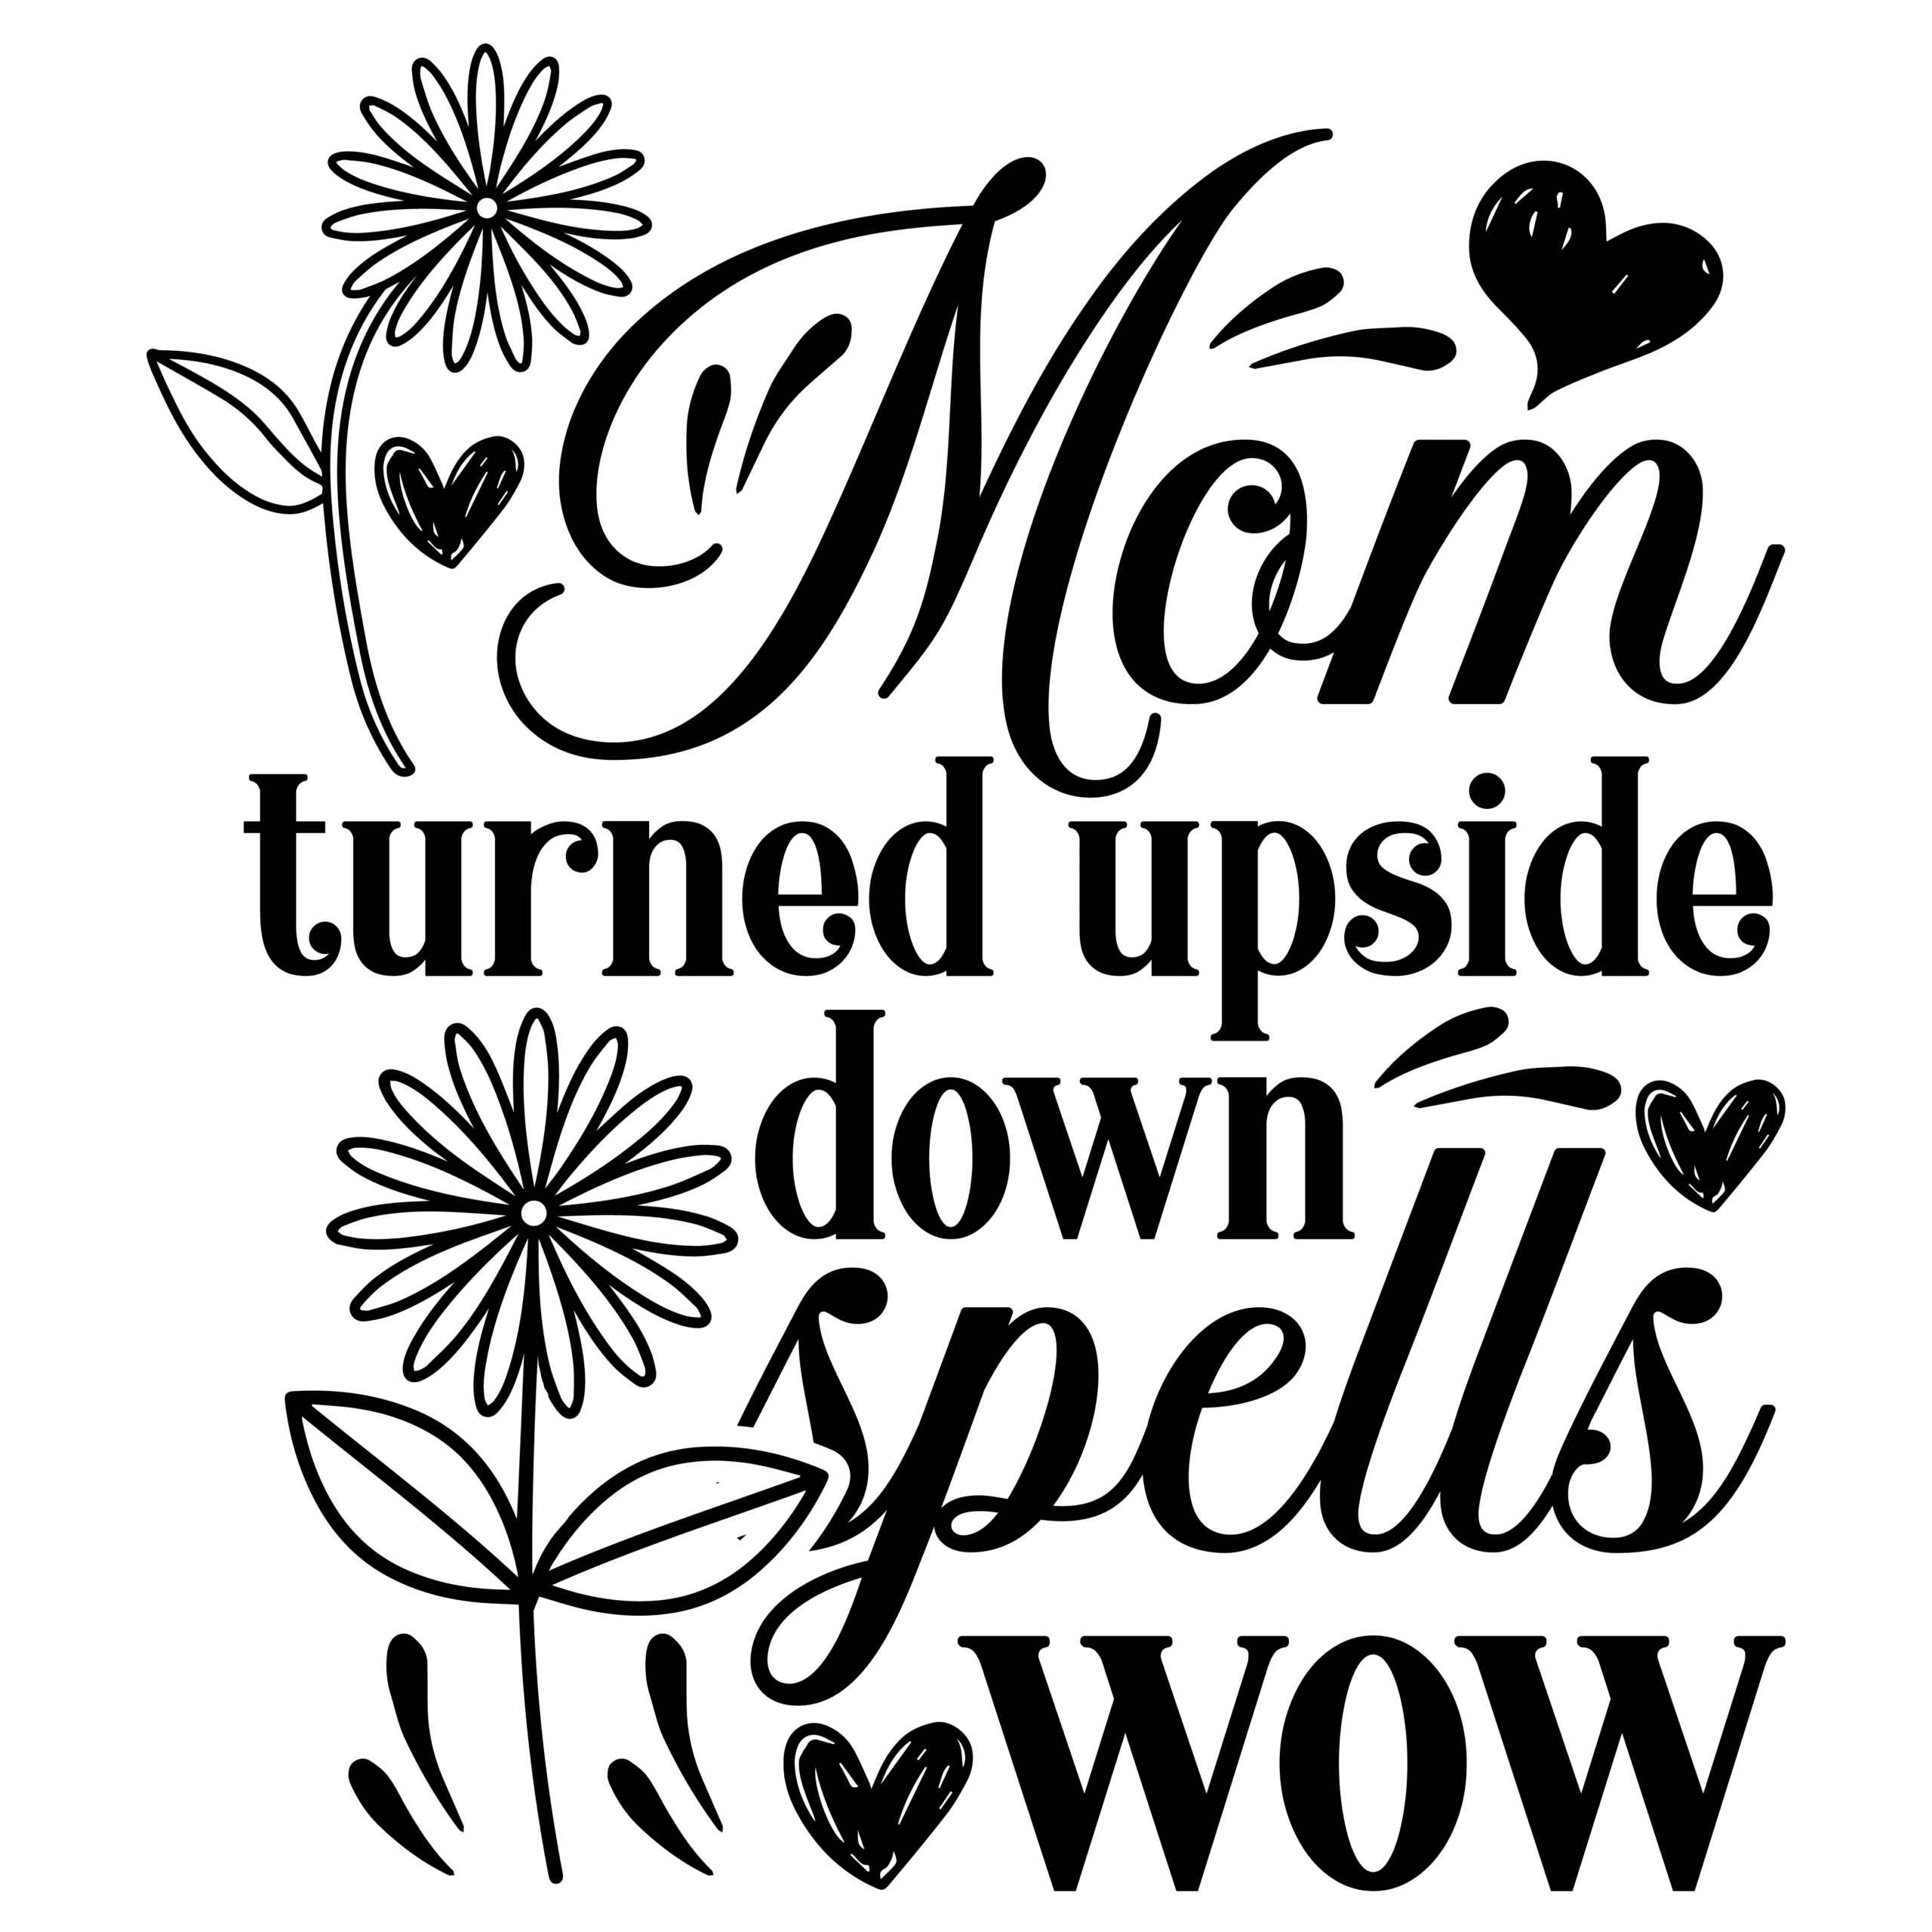 Mom turned upside down spells wow-01